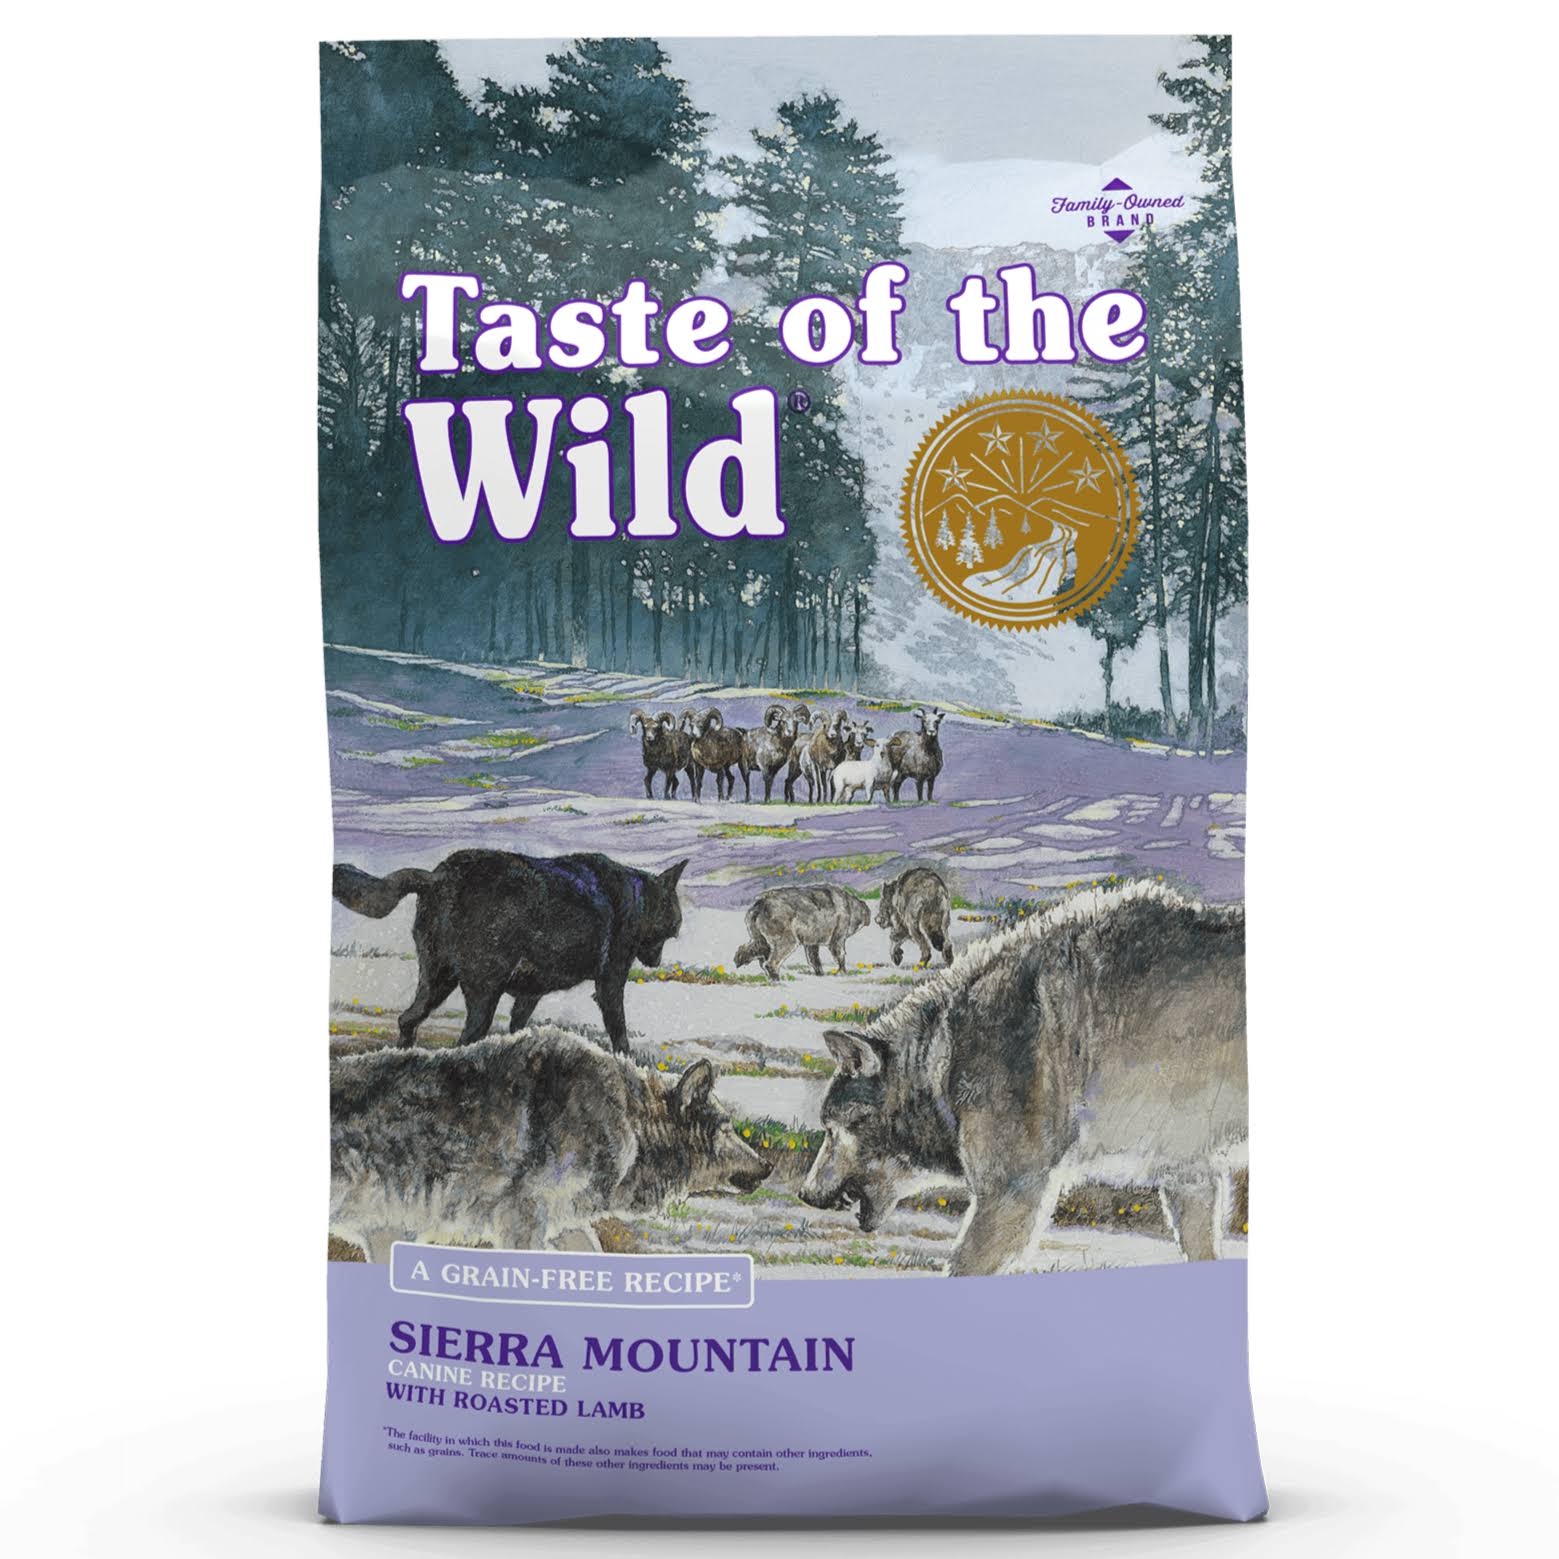 Taste of The Wild Sierra Mountain Grain-Free Dry Dog Food